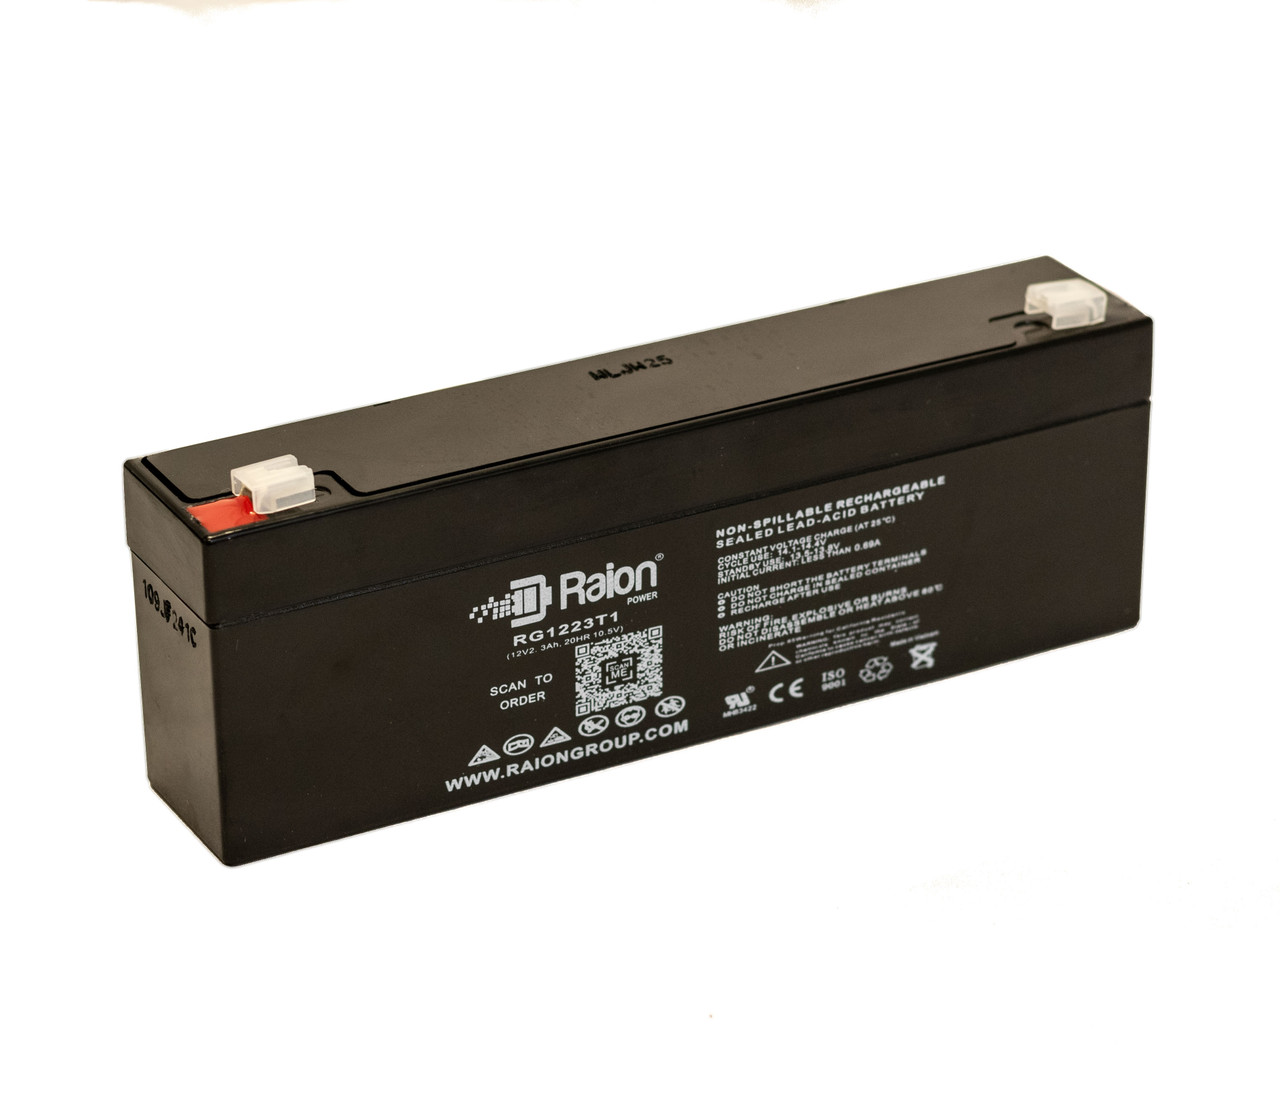 Raion Power RG1223T1 Replacement Battery for Rhino SLA 2.2-12